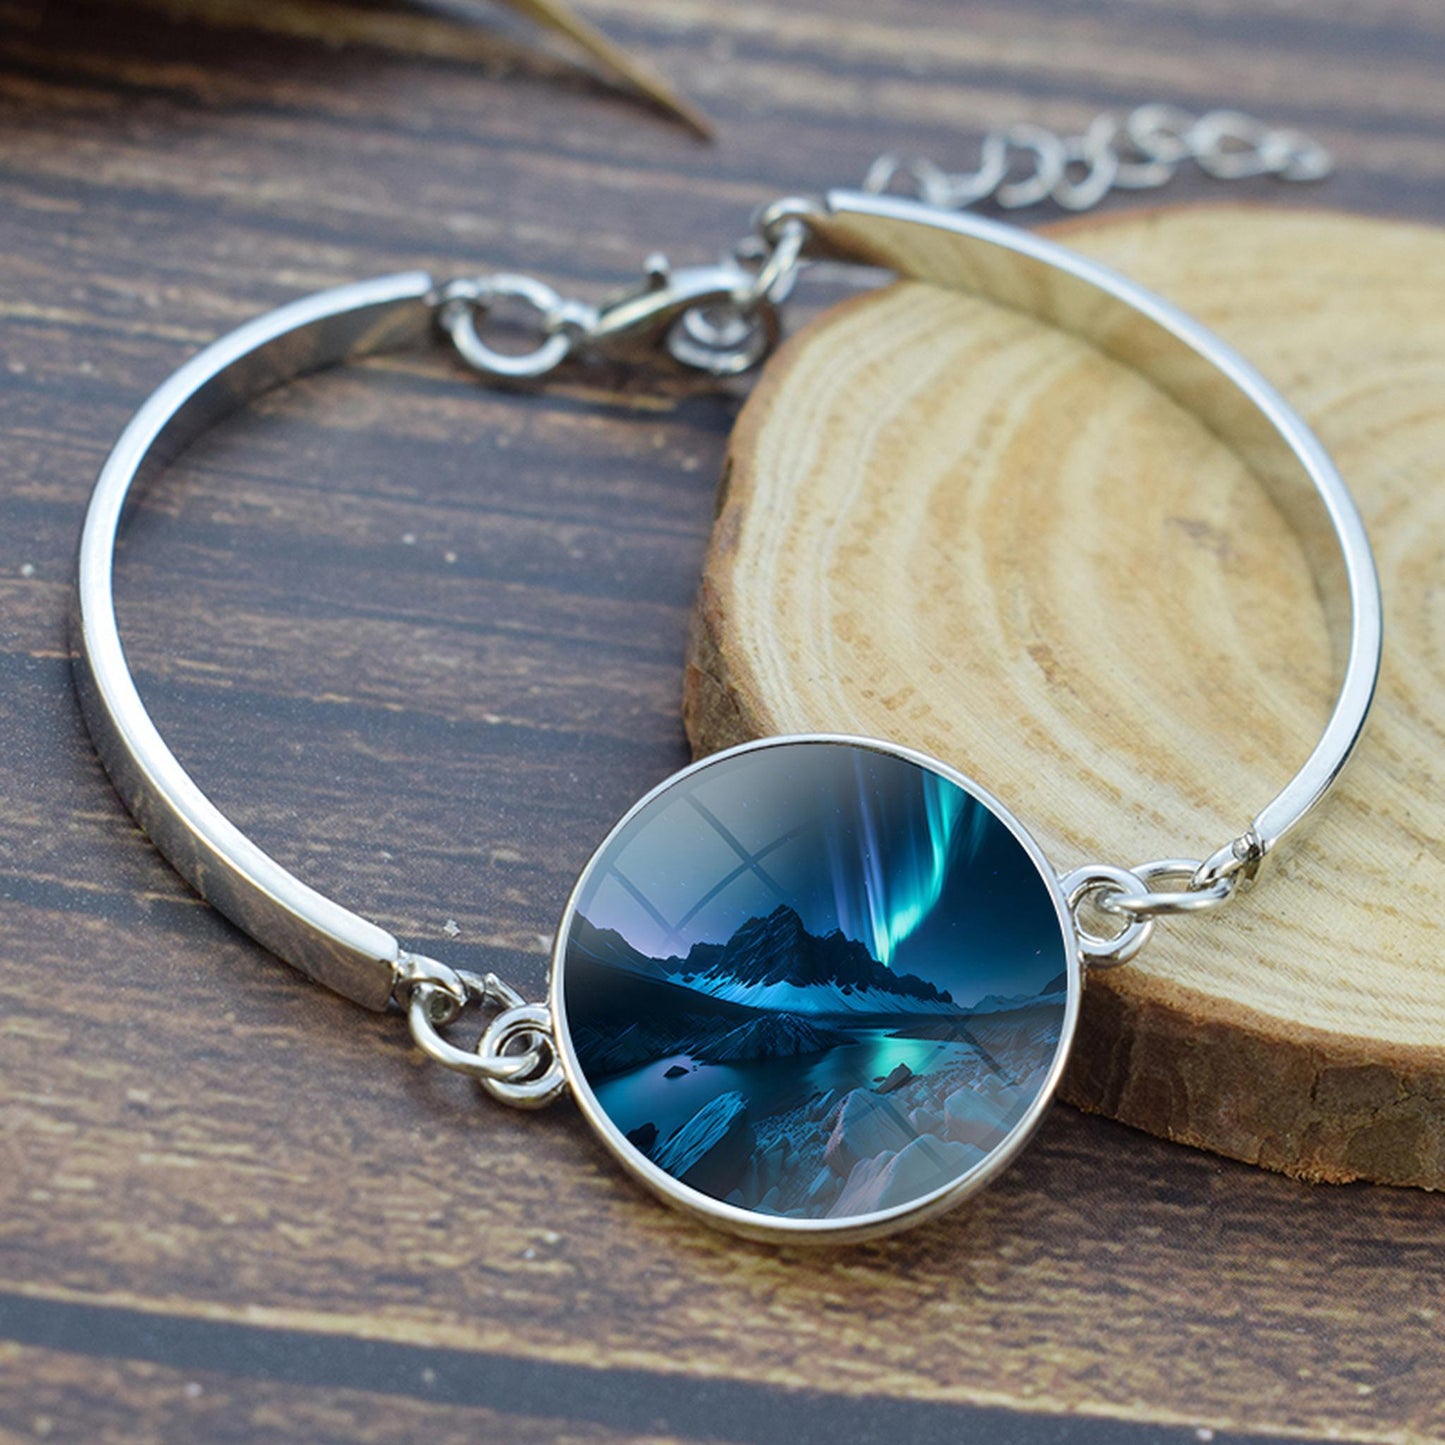 Unique Aurora Borealis Bangle Bracelet - Northern Light Jewelry - Glass Cabochon Silver Plated Bracelet - Perfect Aurora Lovers Gift 9